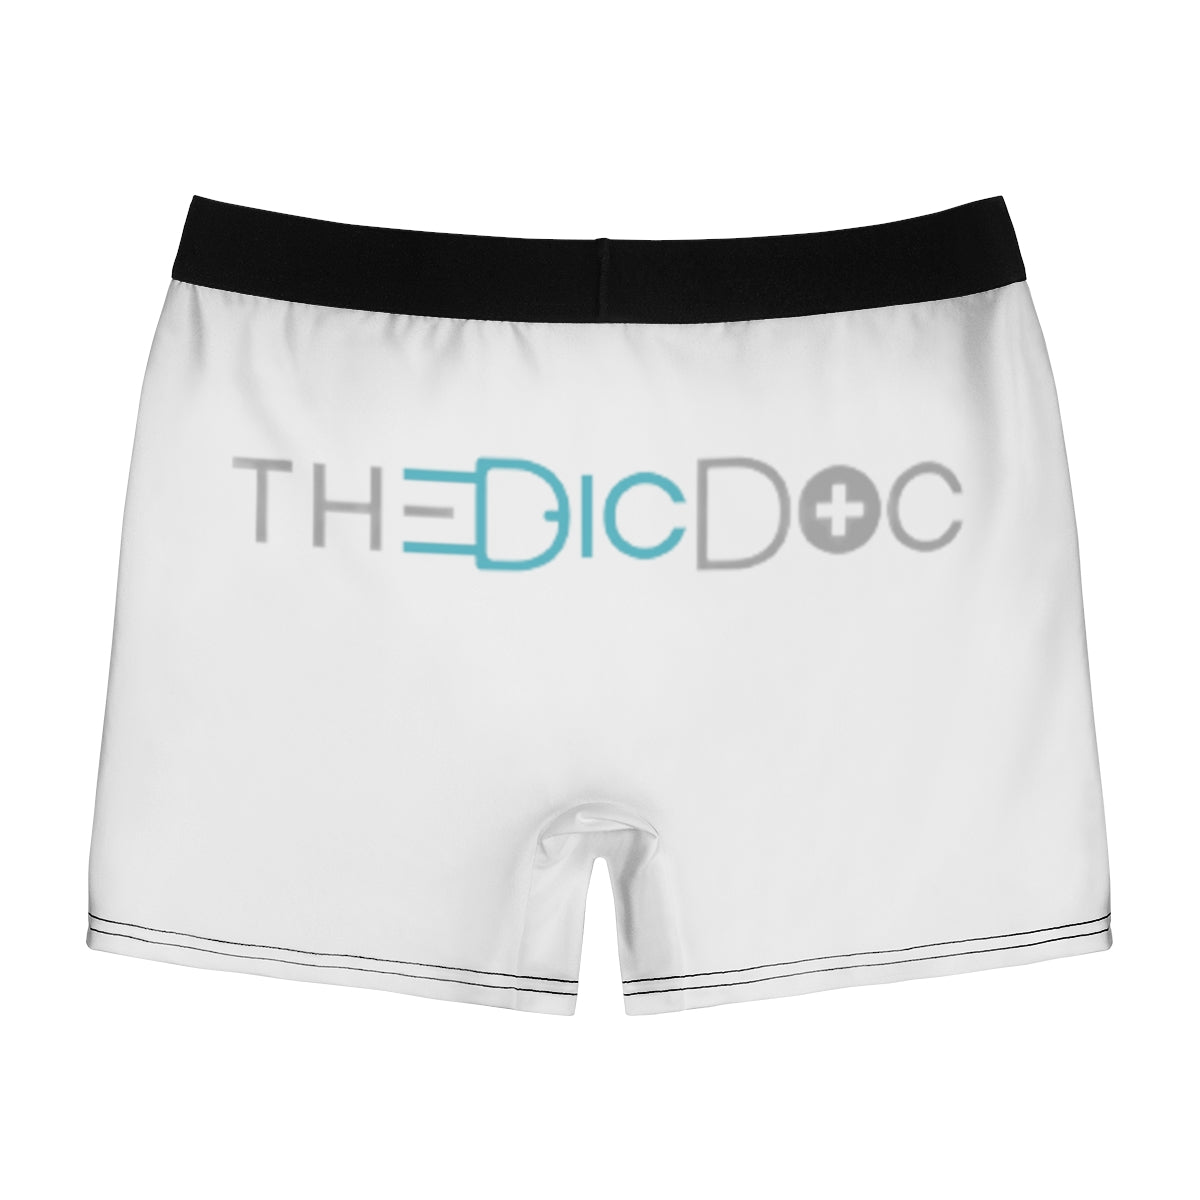 Dick Doc Character Men's Boxer Briefs – The Dick Doc Shop